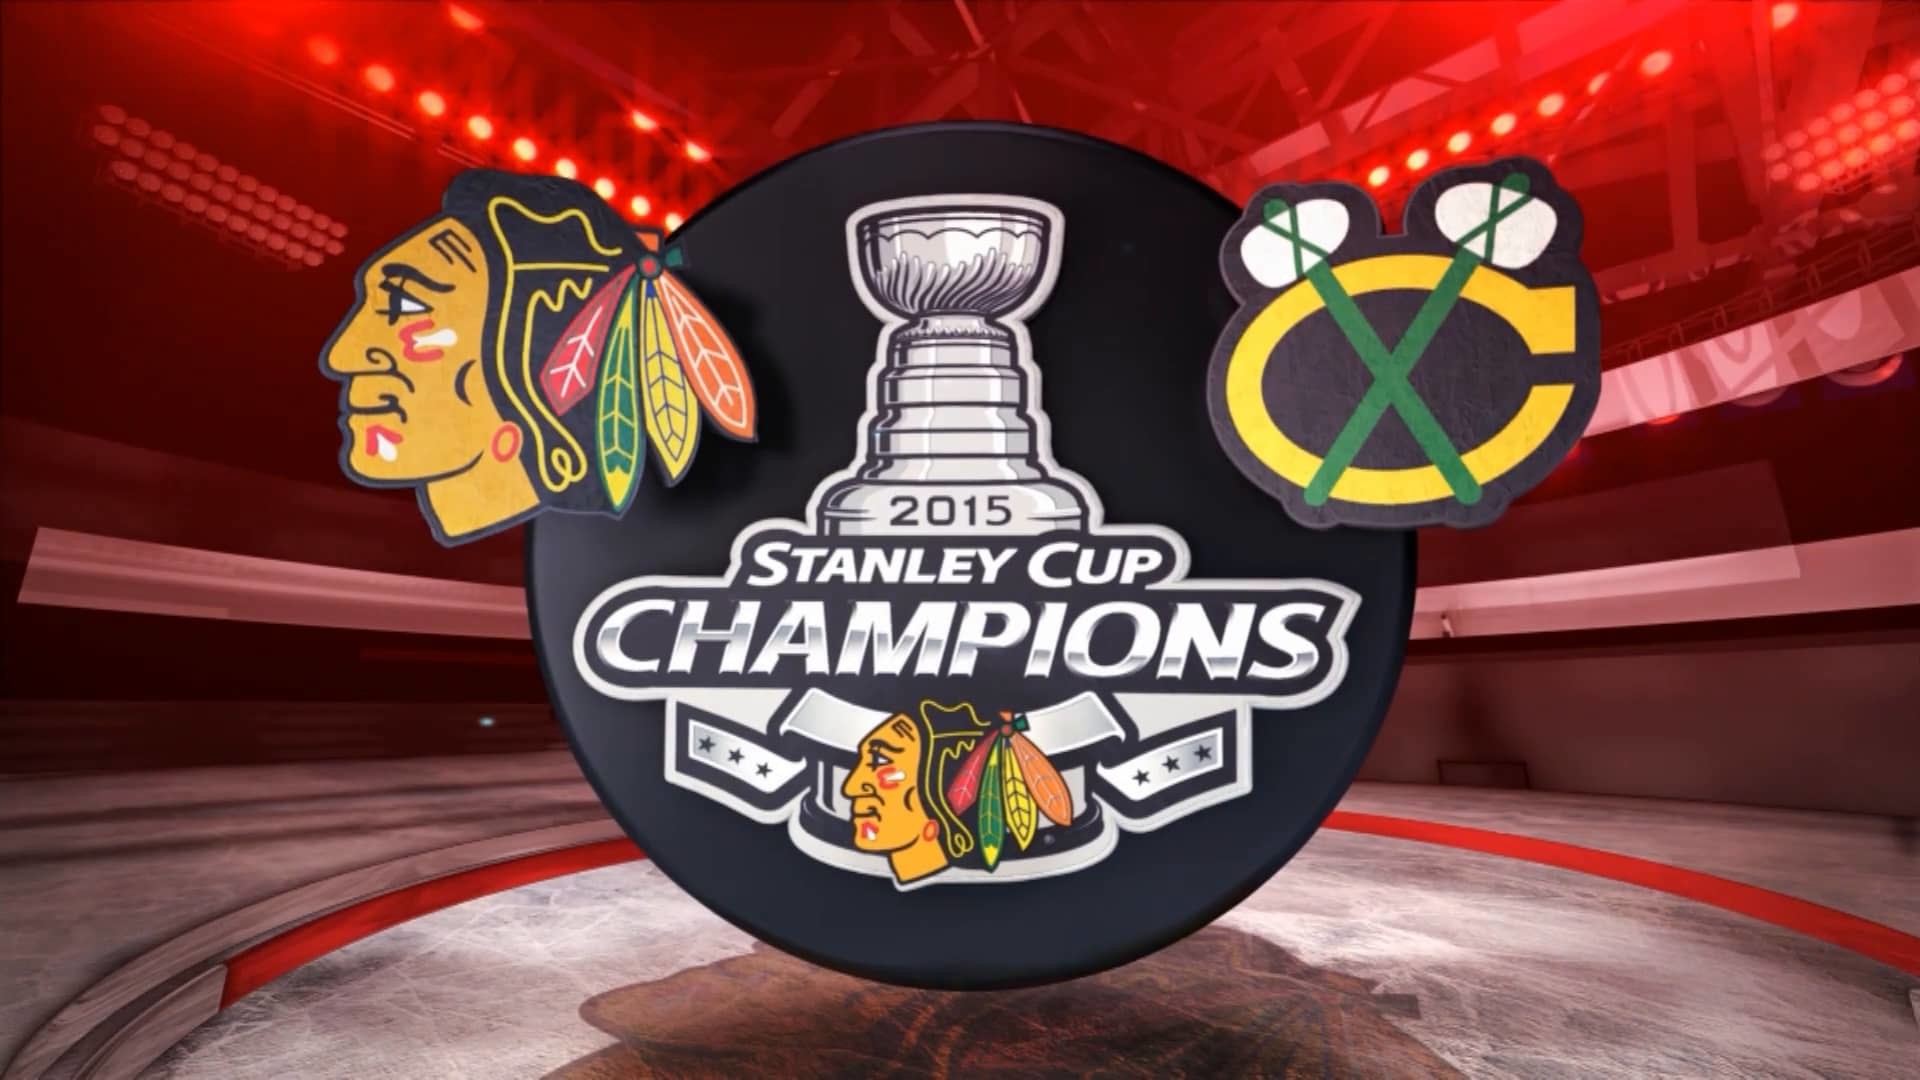 1920x1080 NHL Chicago Blackhawks Stanley Cup Champions 2015 wallpaper HD .